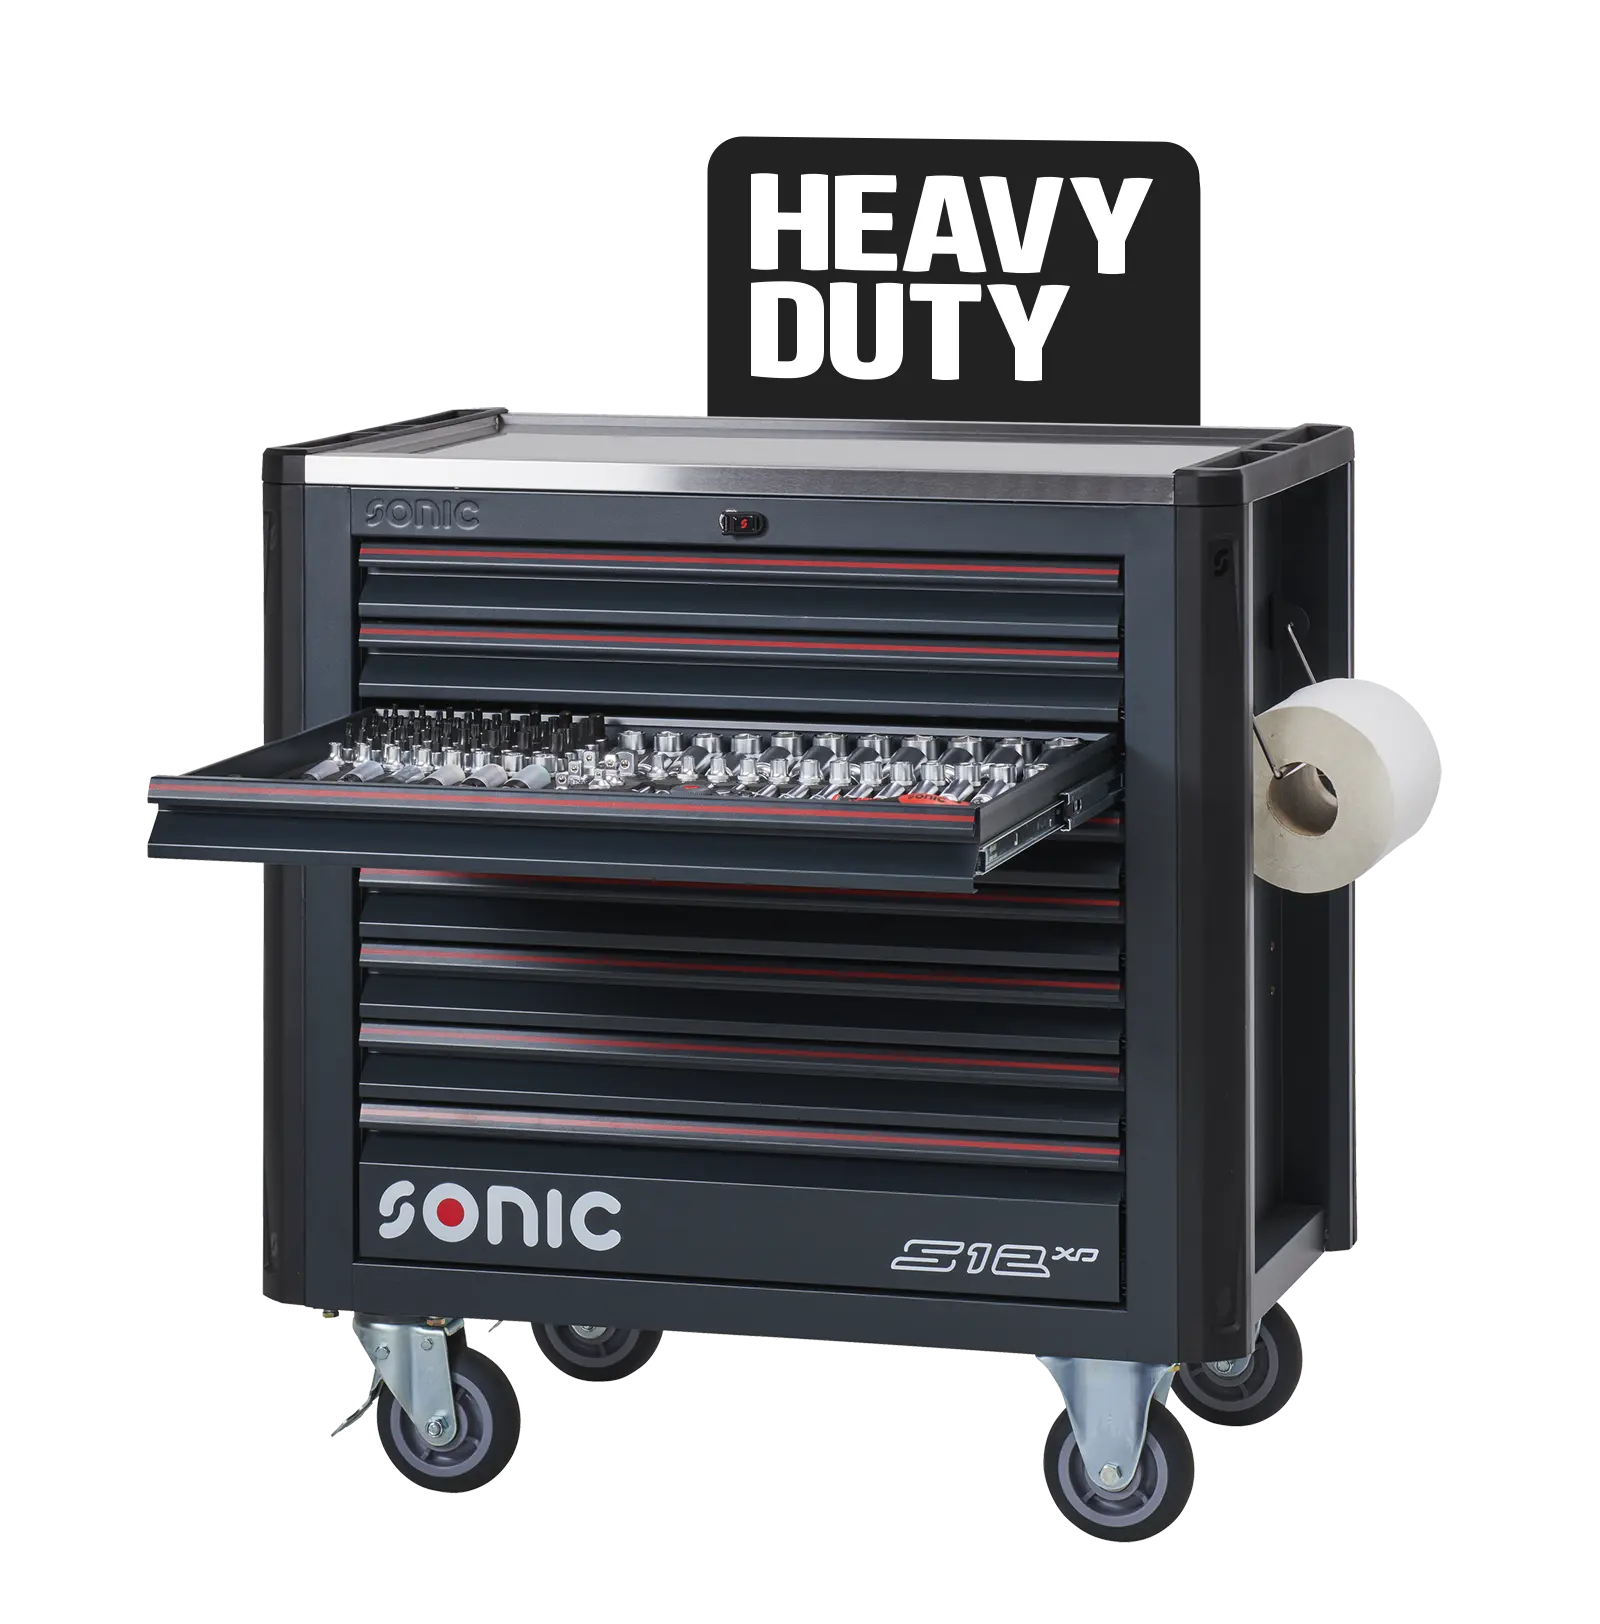 Filled toolbox NEXT S12XD 723-pcs (Heavy Duty) - Sonic Equipment